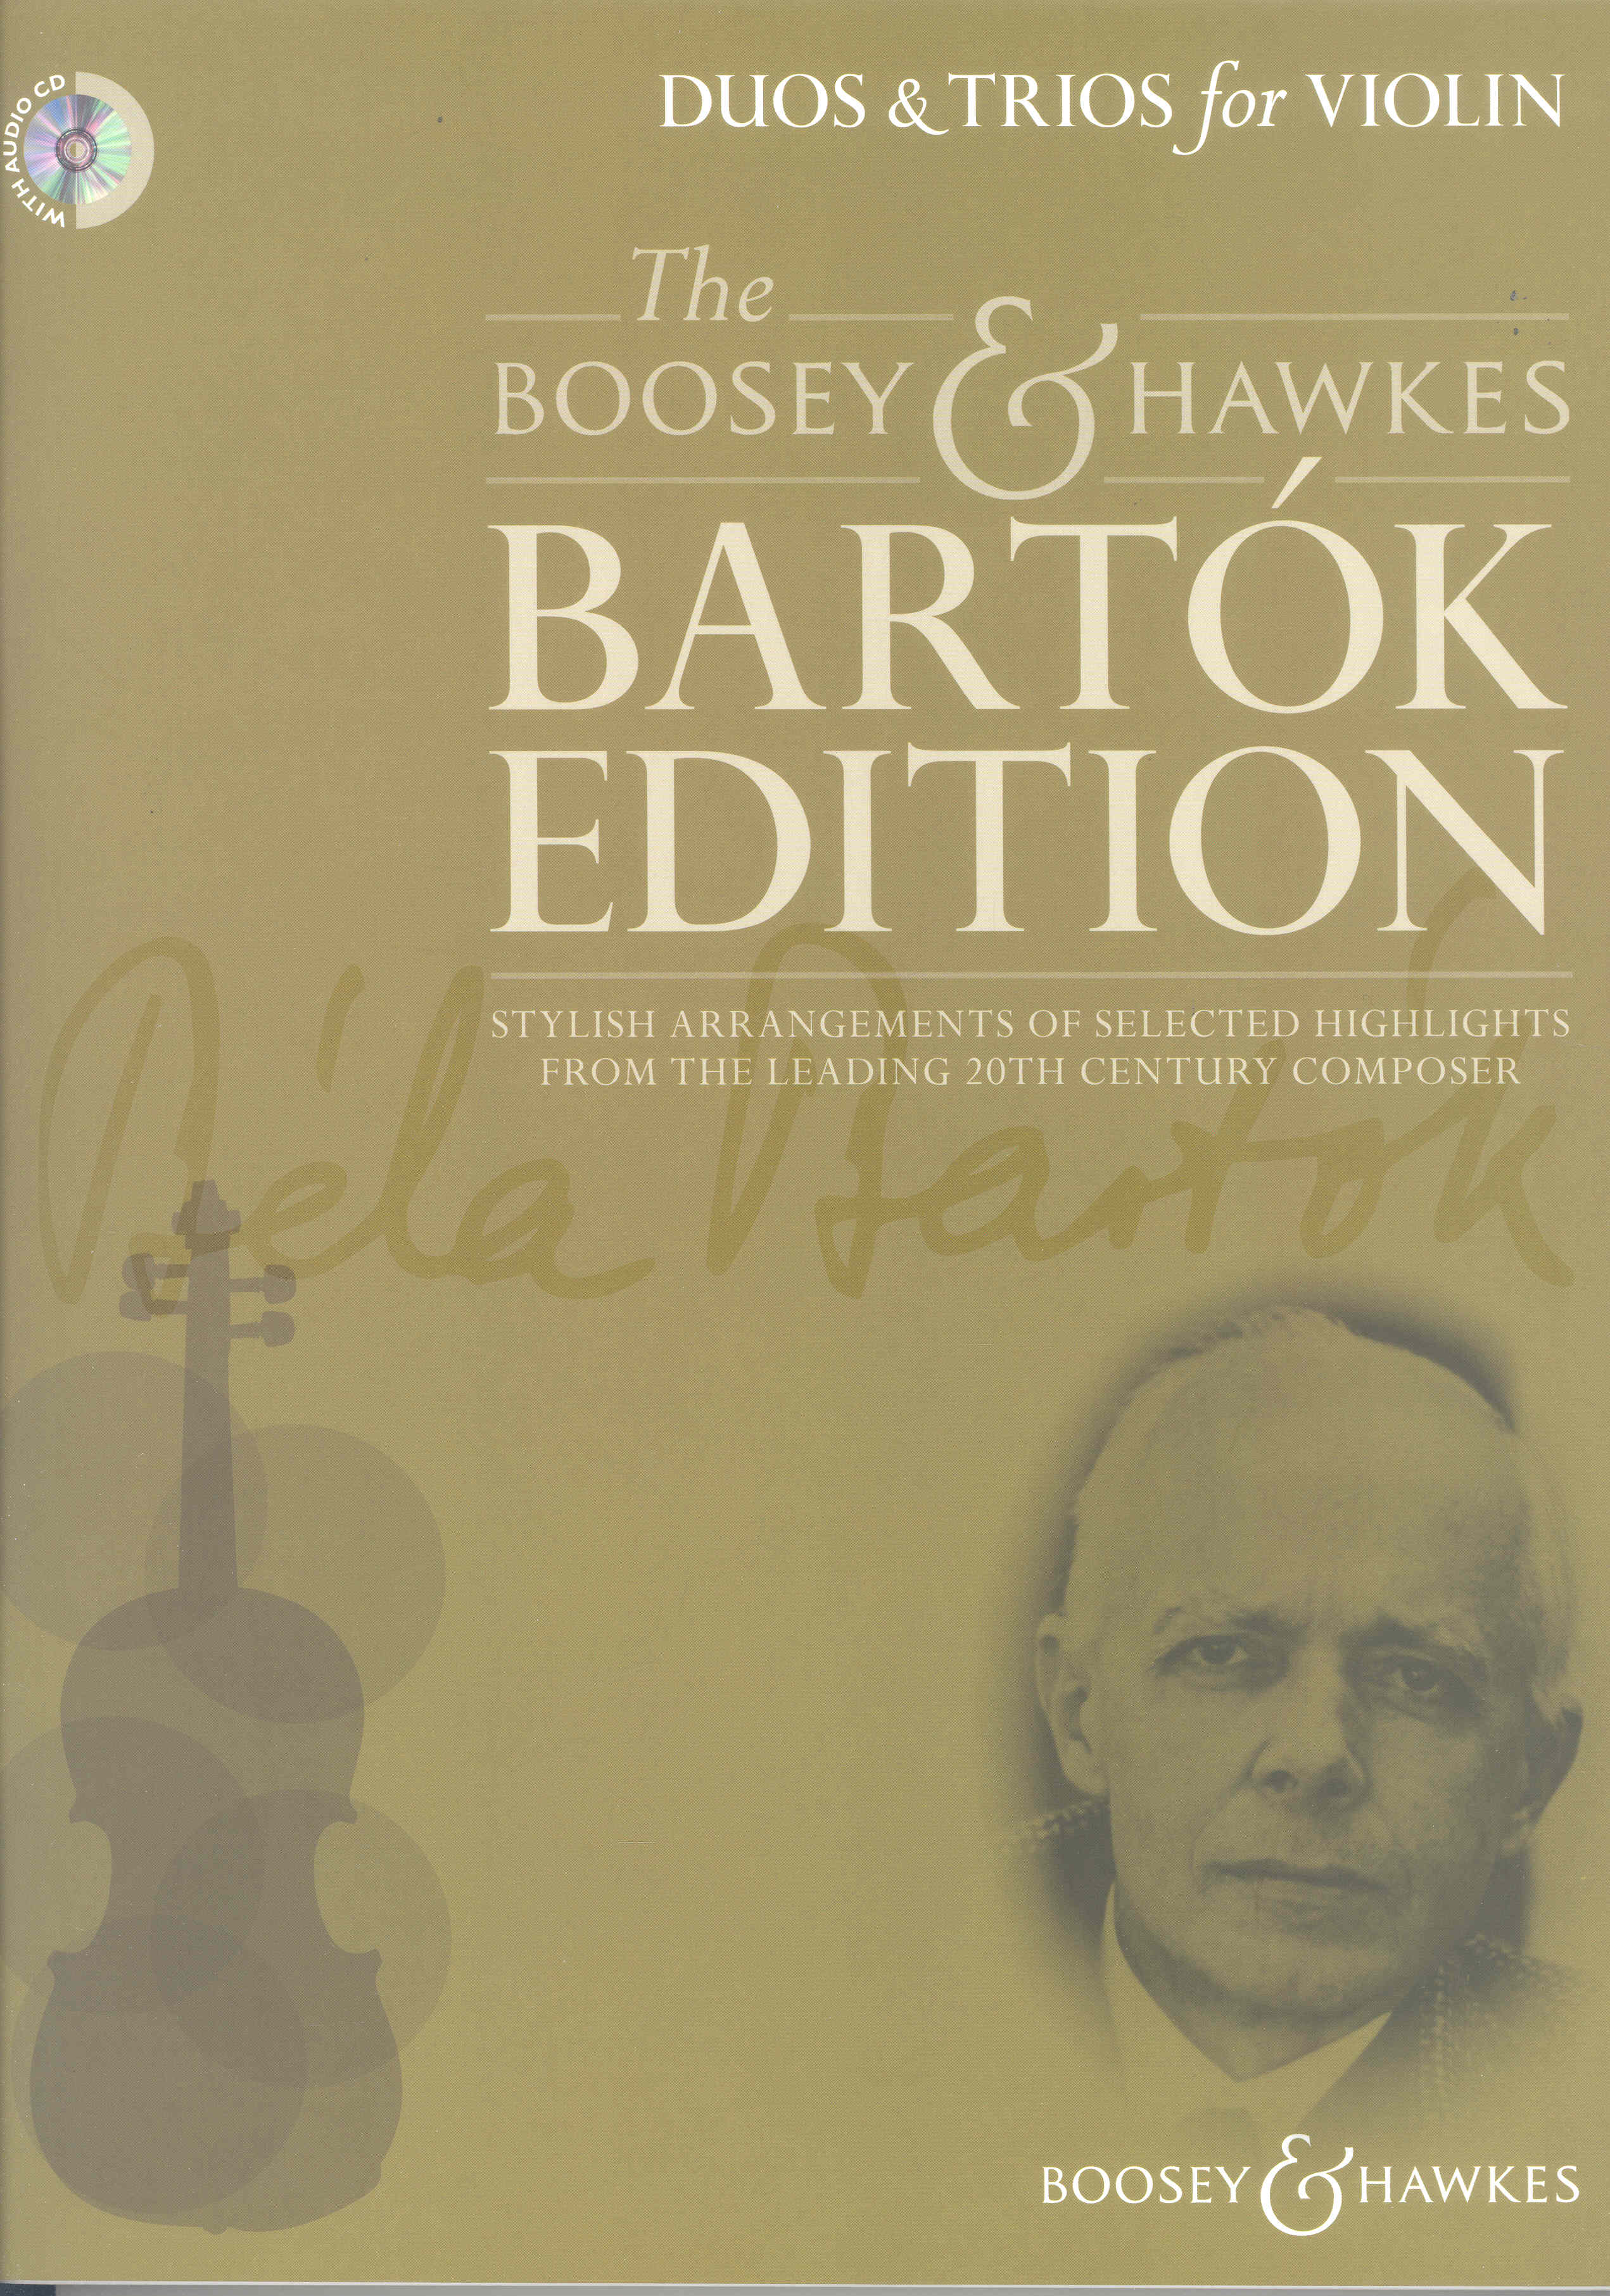 Bartok Edition Duos & Trios For Violin + Cd Sheet Music Songbook